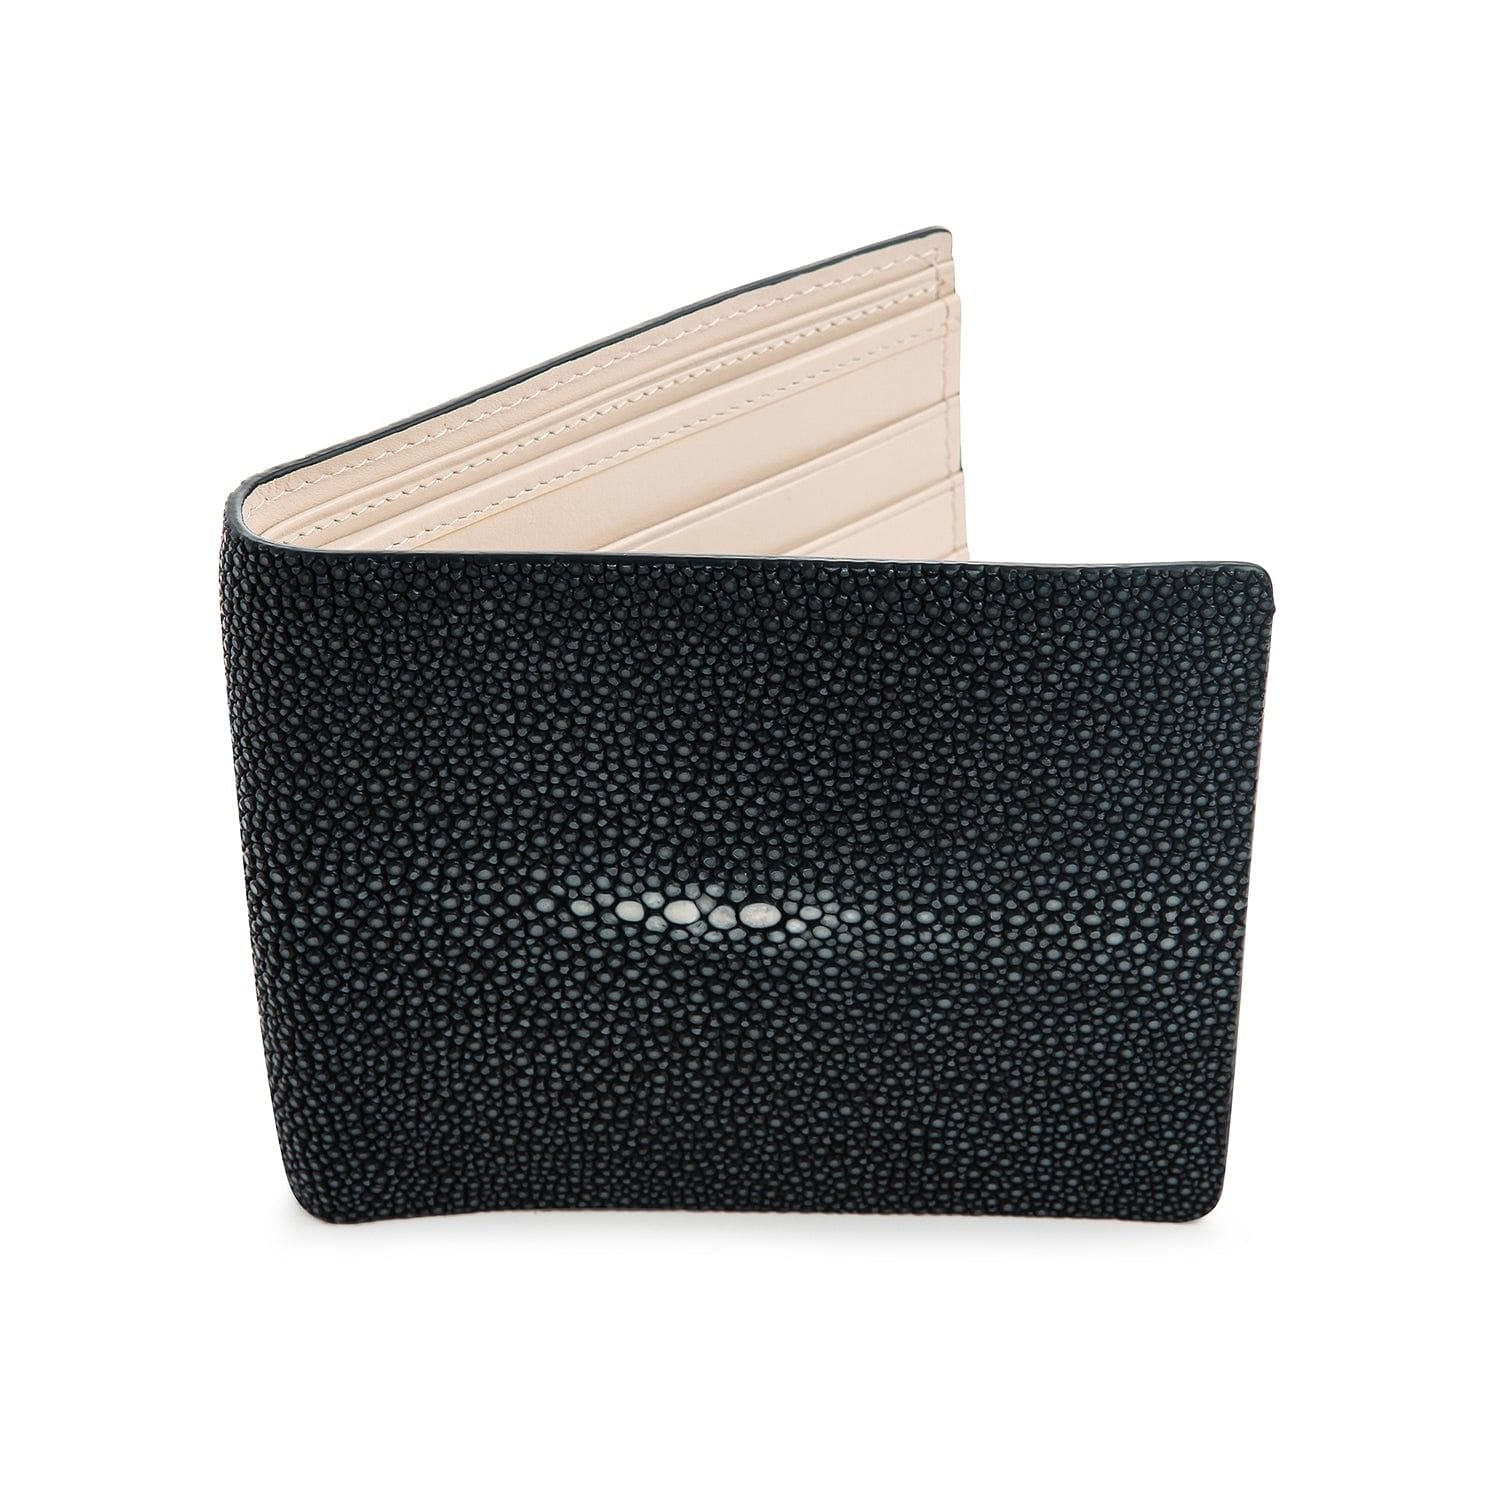 New Black Genuine Leather Stingray Skin Women Tri-fold Clutch Wallet Purse.  | eBay